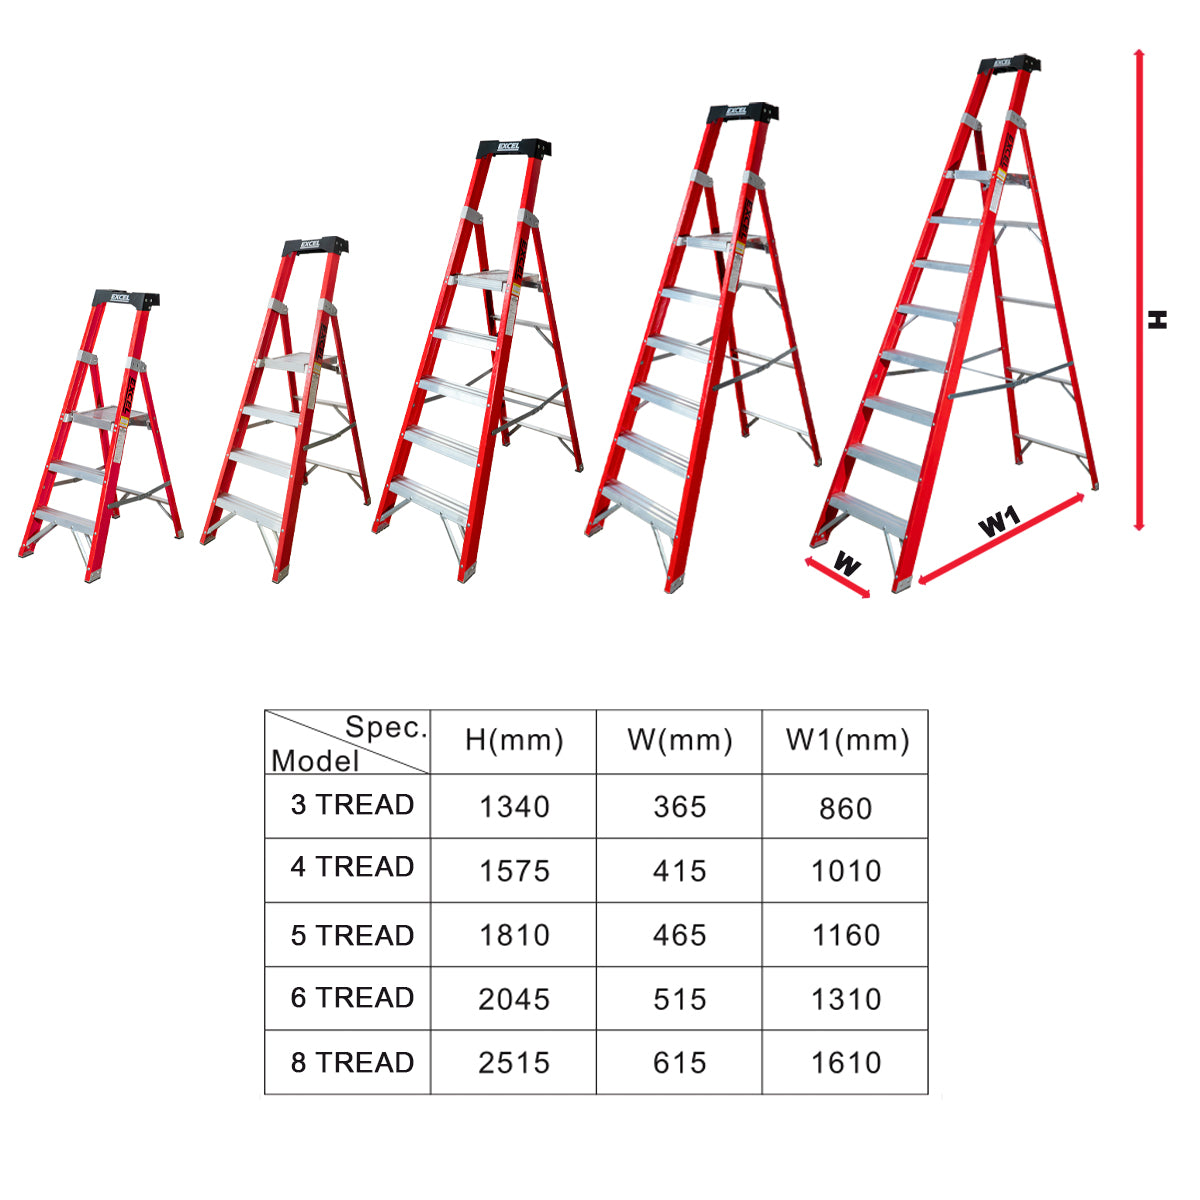 Excel Electricians Fibreglass Platform Step Ladder 4 Tread 1.57m EN131